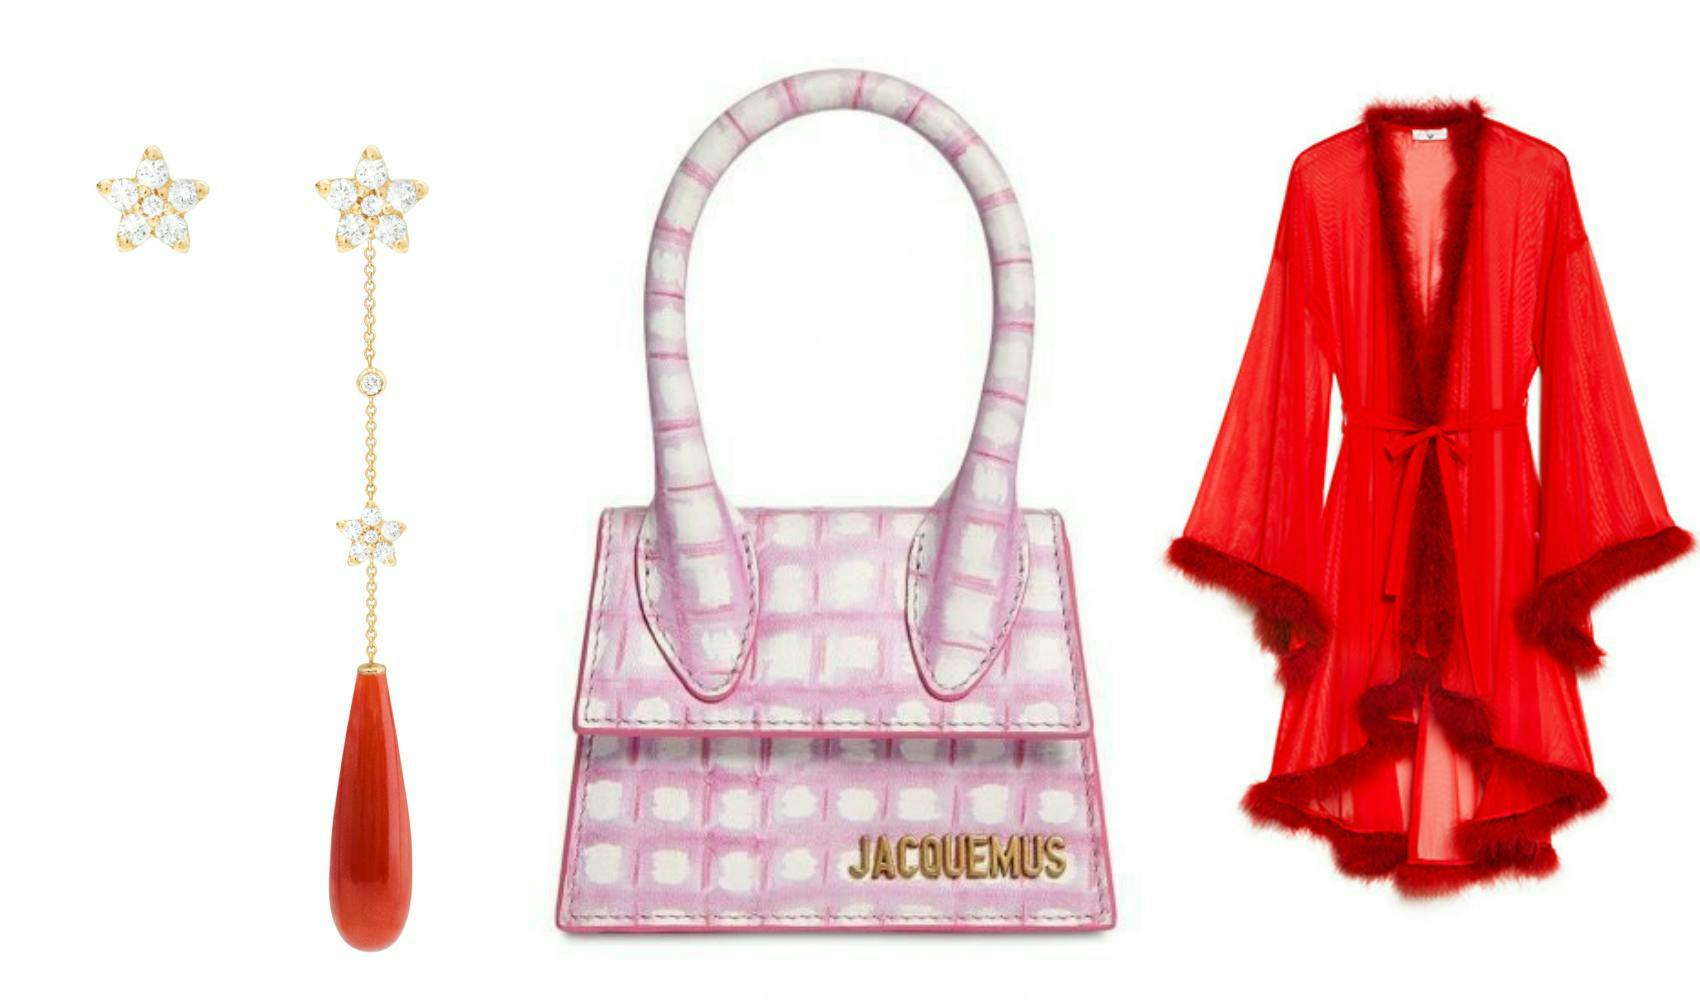 handbag accessories bag accessory clothing apparel